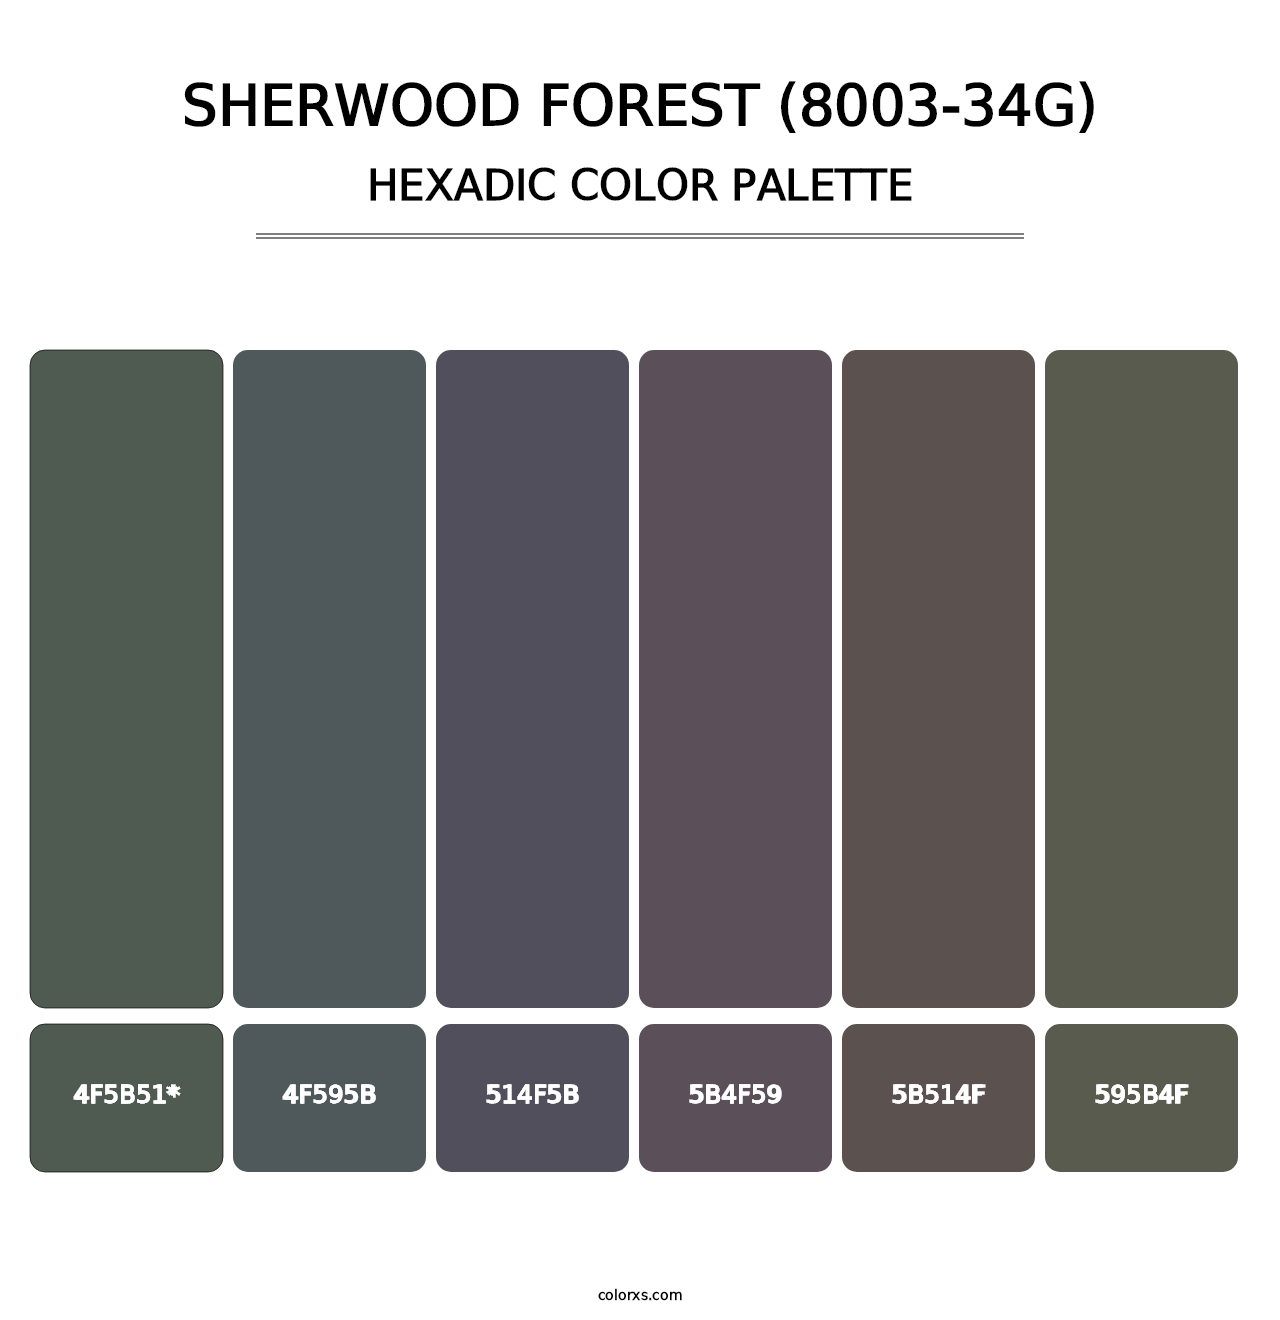 Sherwood Forest (8003-34G) - Hexadic Color Palette